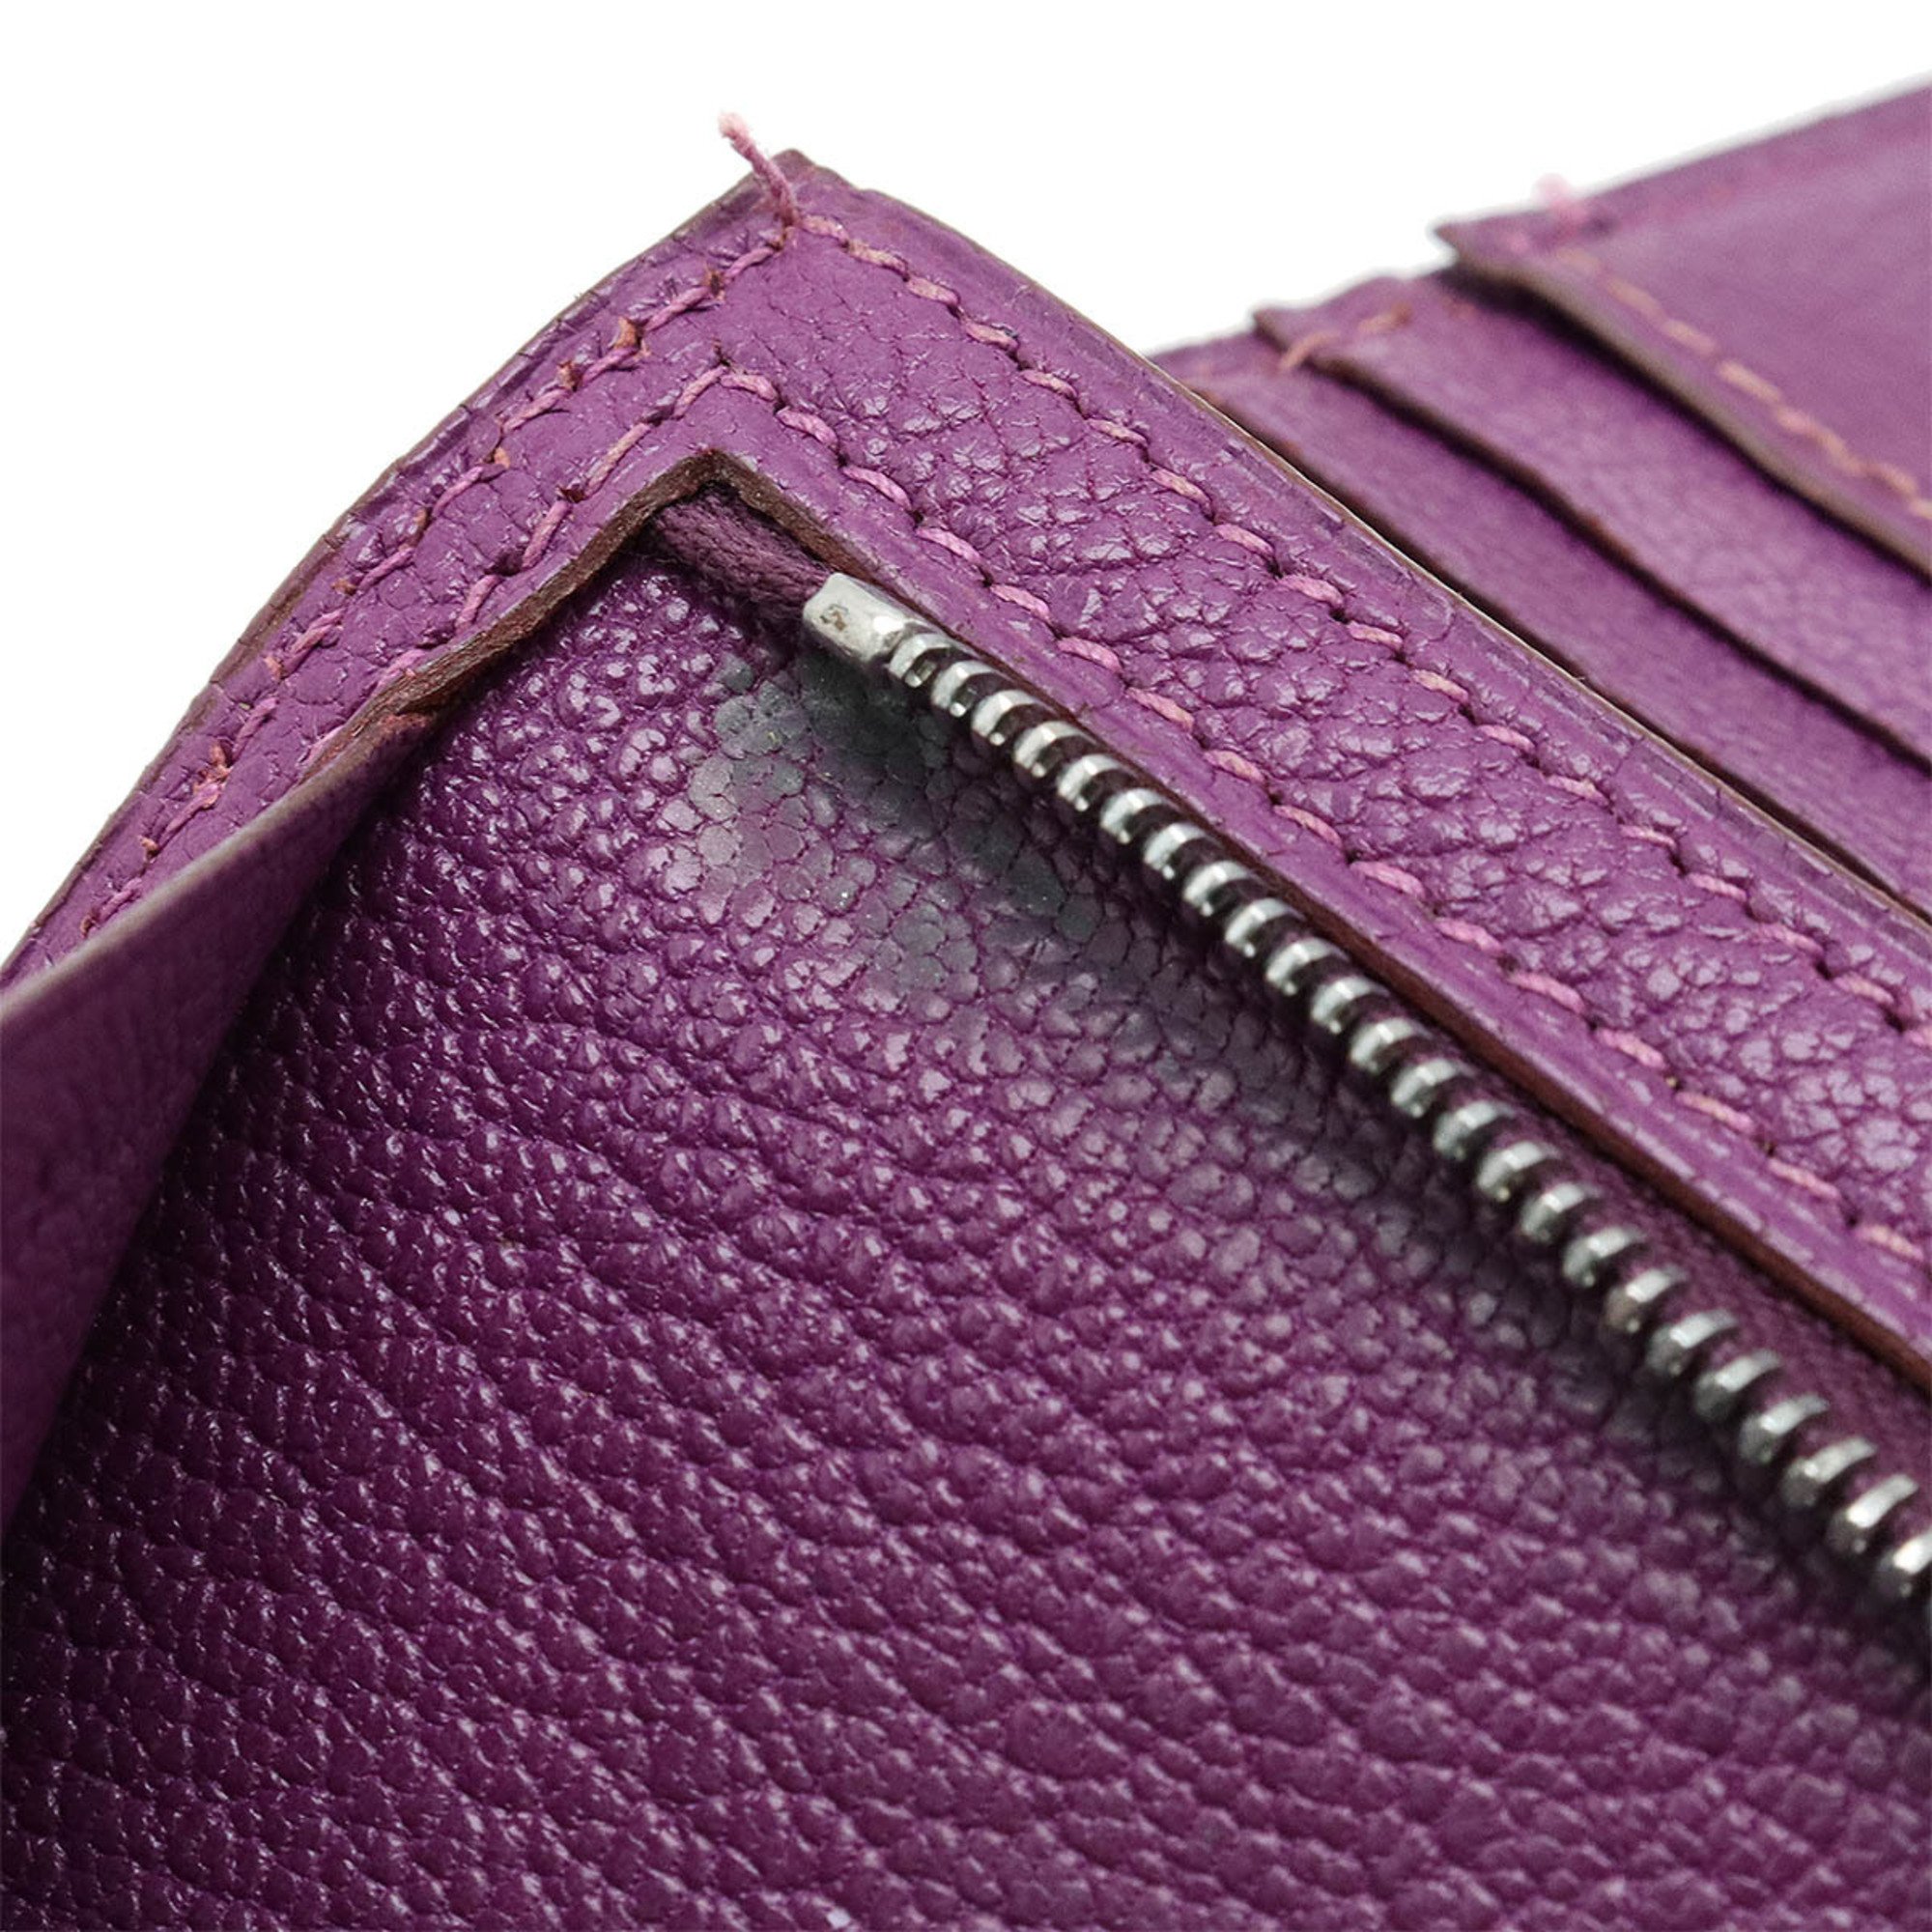 HERMES Bearn Classic Bi-fold Long Wallet Chevre Leather Purple H Stamp